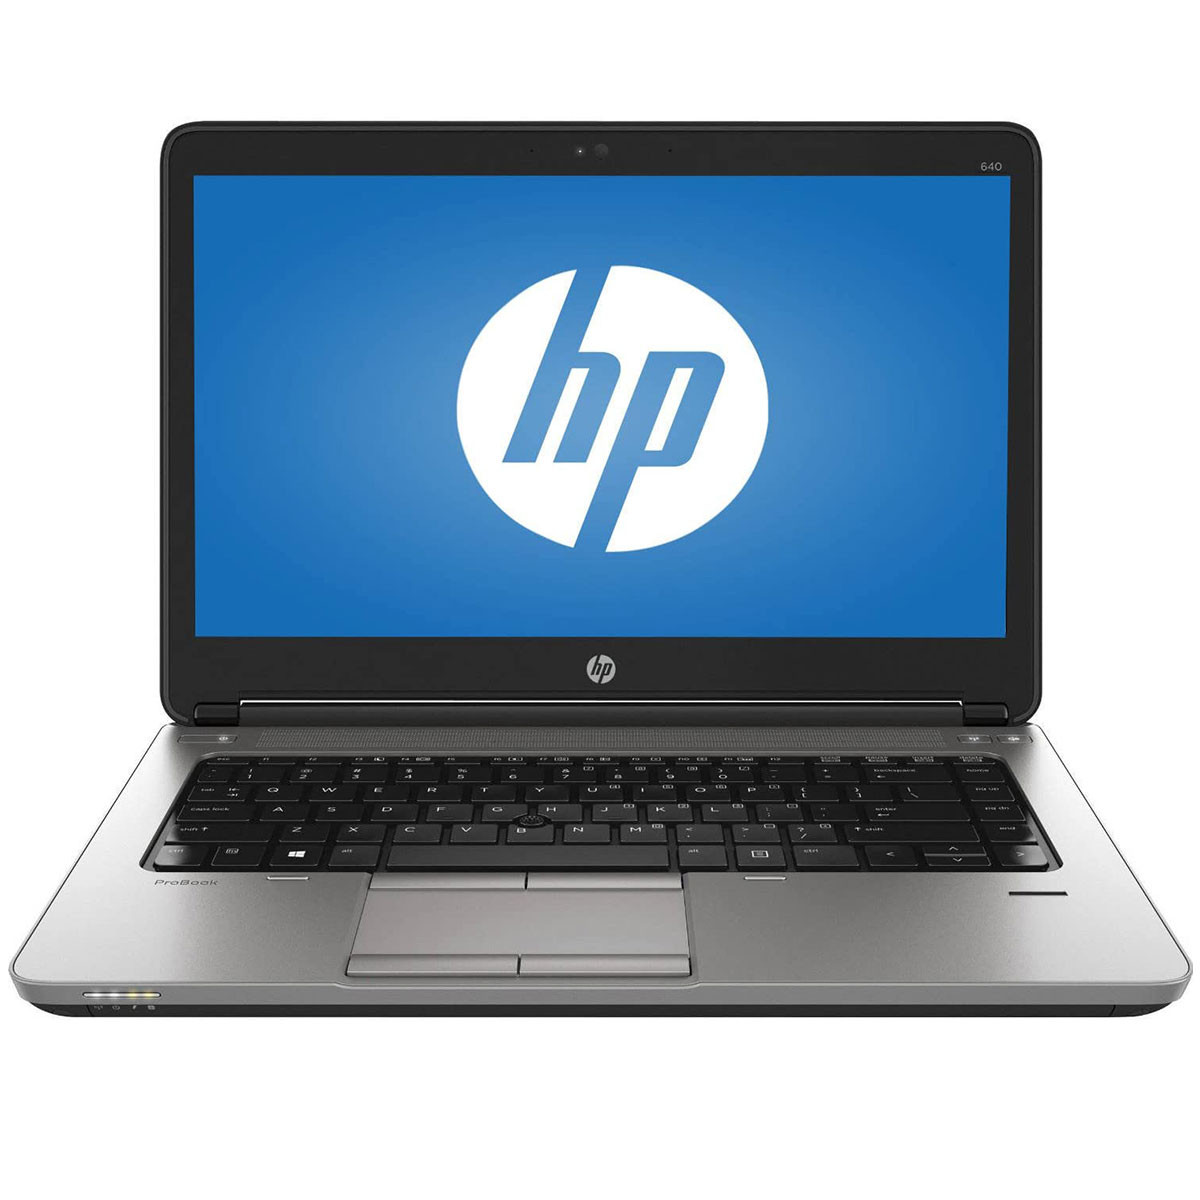 LAPTOP HP 640 G2/I5-6300/8GB DDR4/ SSD 256GB / 14"